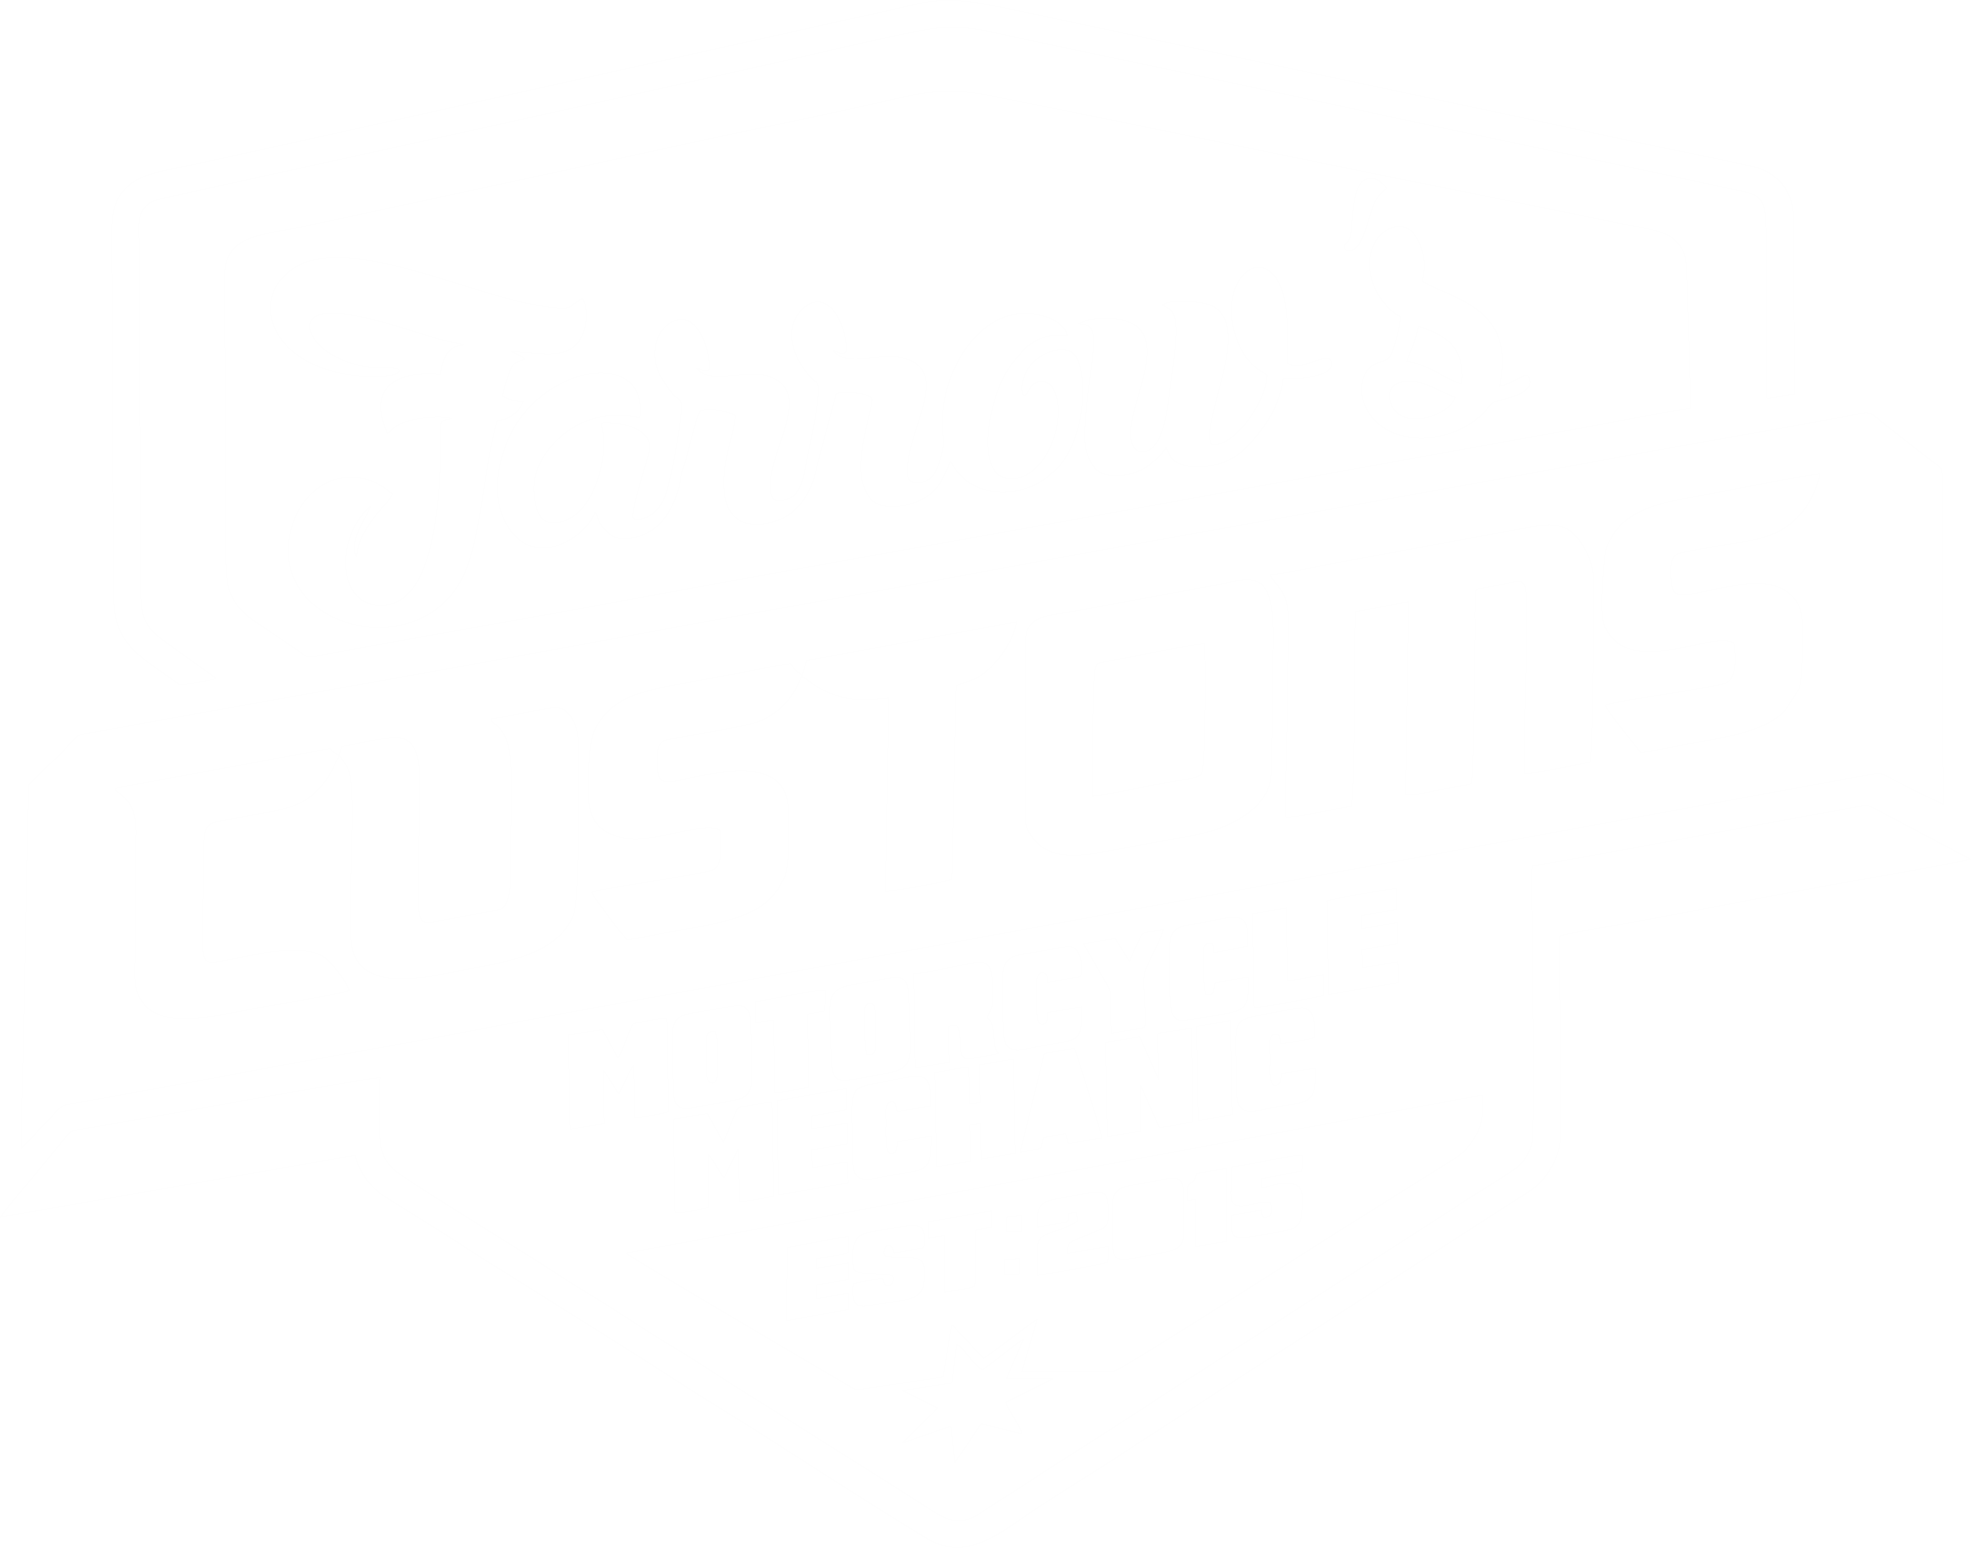 Farrow's Customs